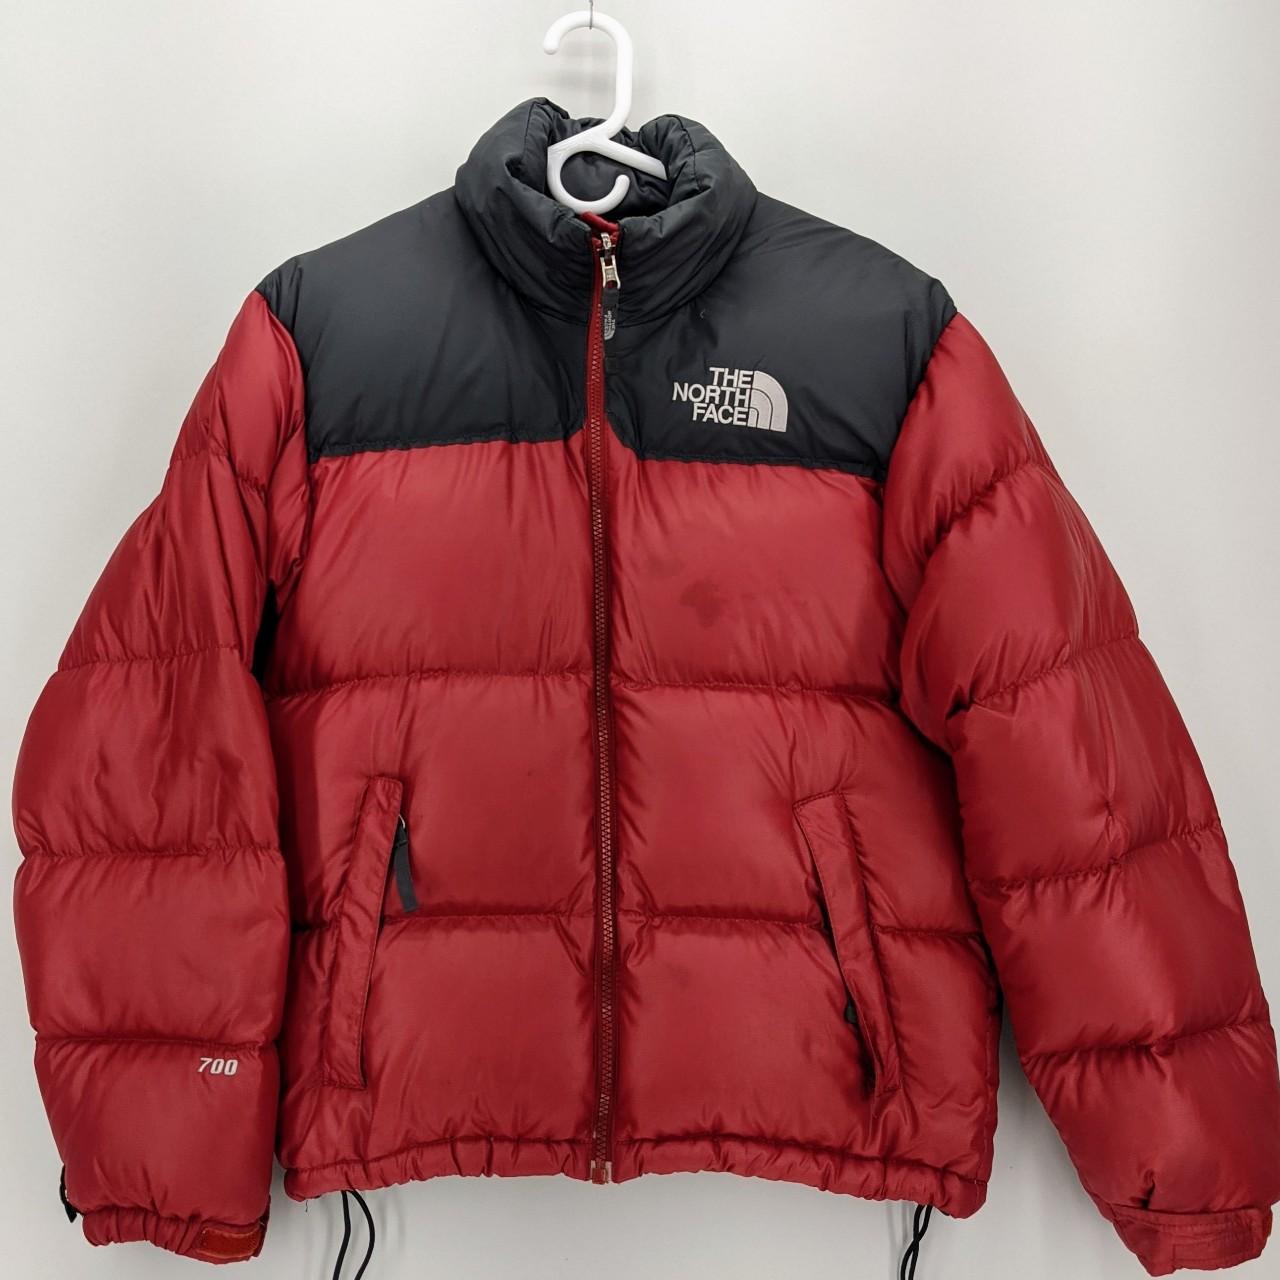 The North Face Vintage Nuptse 700 Puffer Jacket,... - Depop